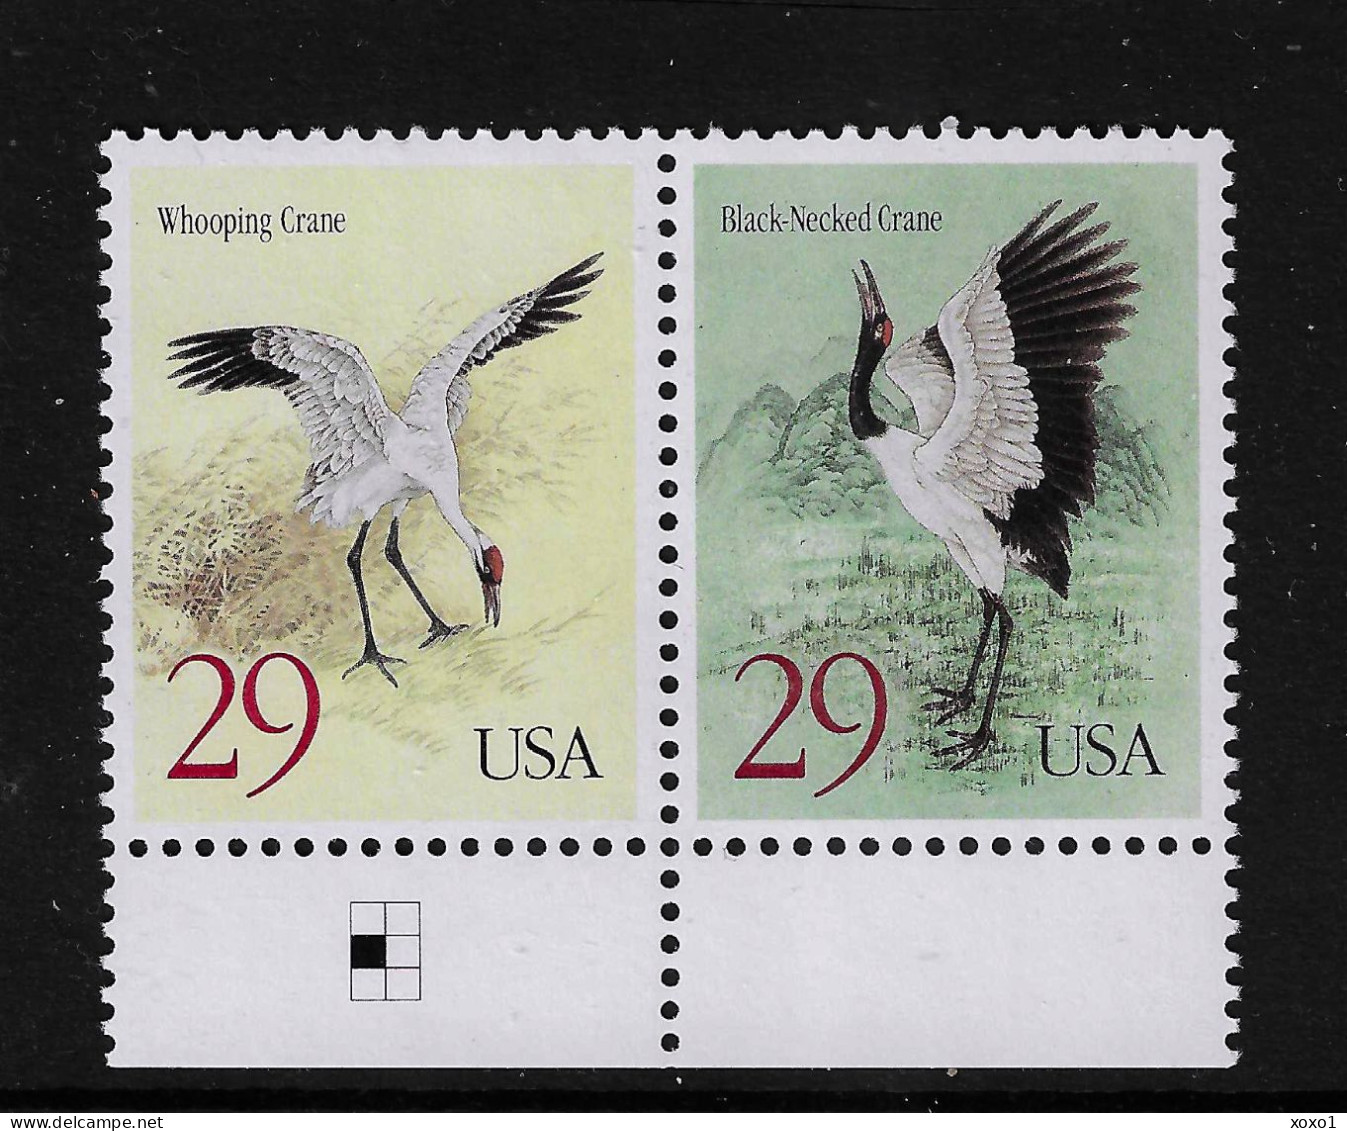 USA 1994 MiNr. 2504 - 2505 Etats-Unis United States Birds Black-necked Crane, Whooping Crane 2v MNH **  2,20 € - Grues Et Gruiformes